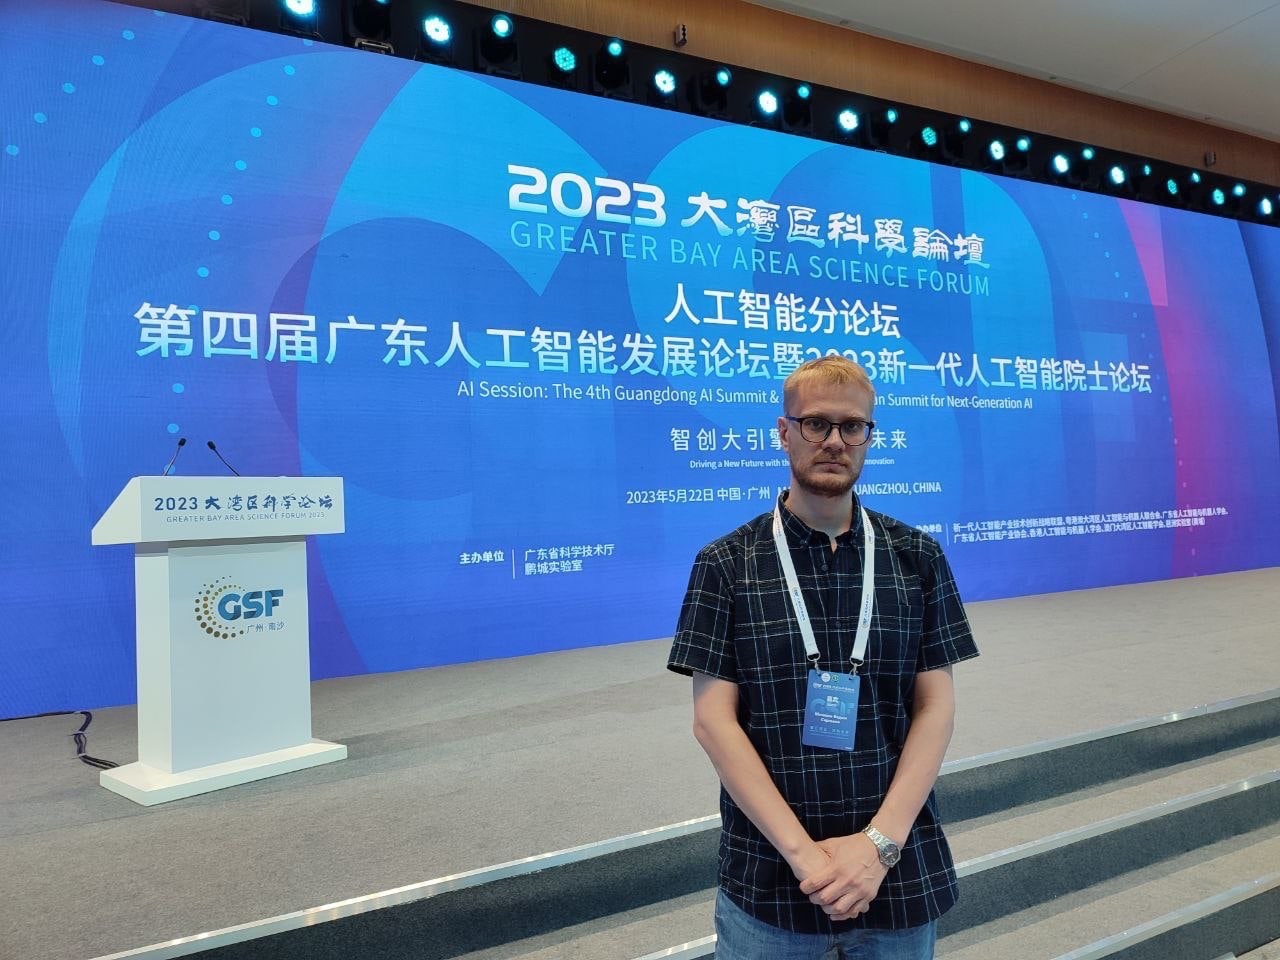 An UlSTU scientist Vadim Moshkin made a presentation on artificial intelligence at a forum in China